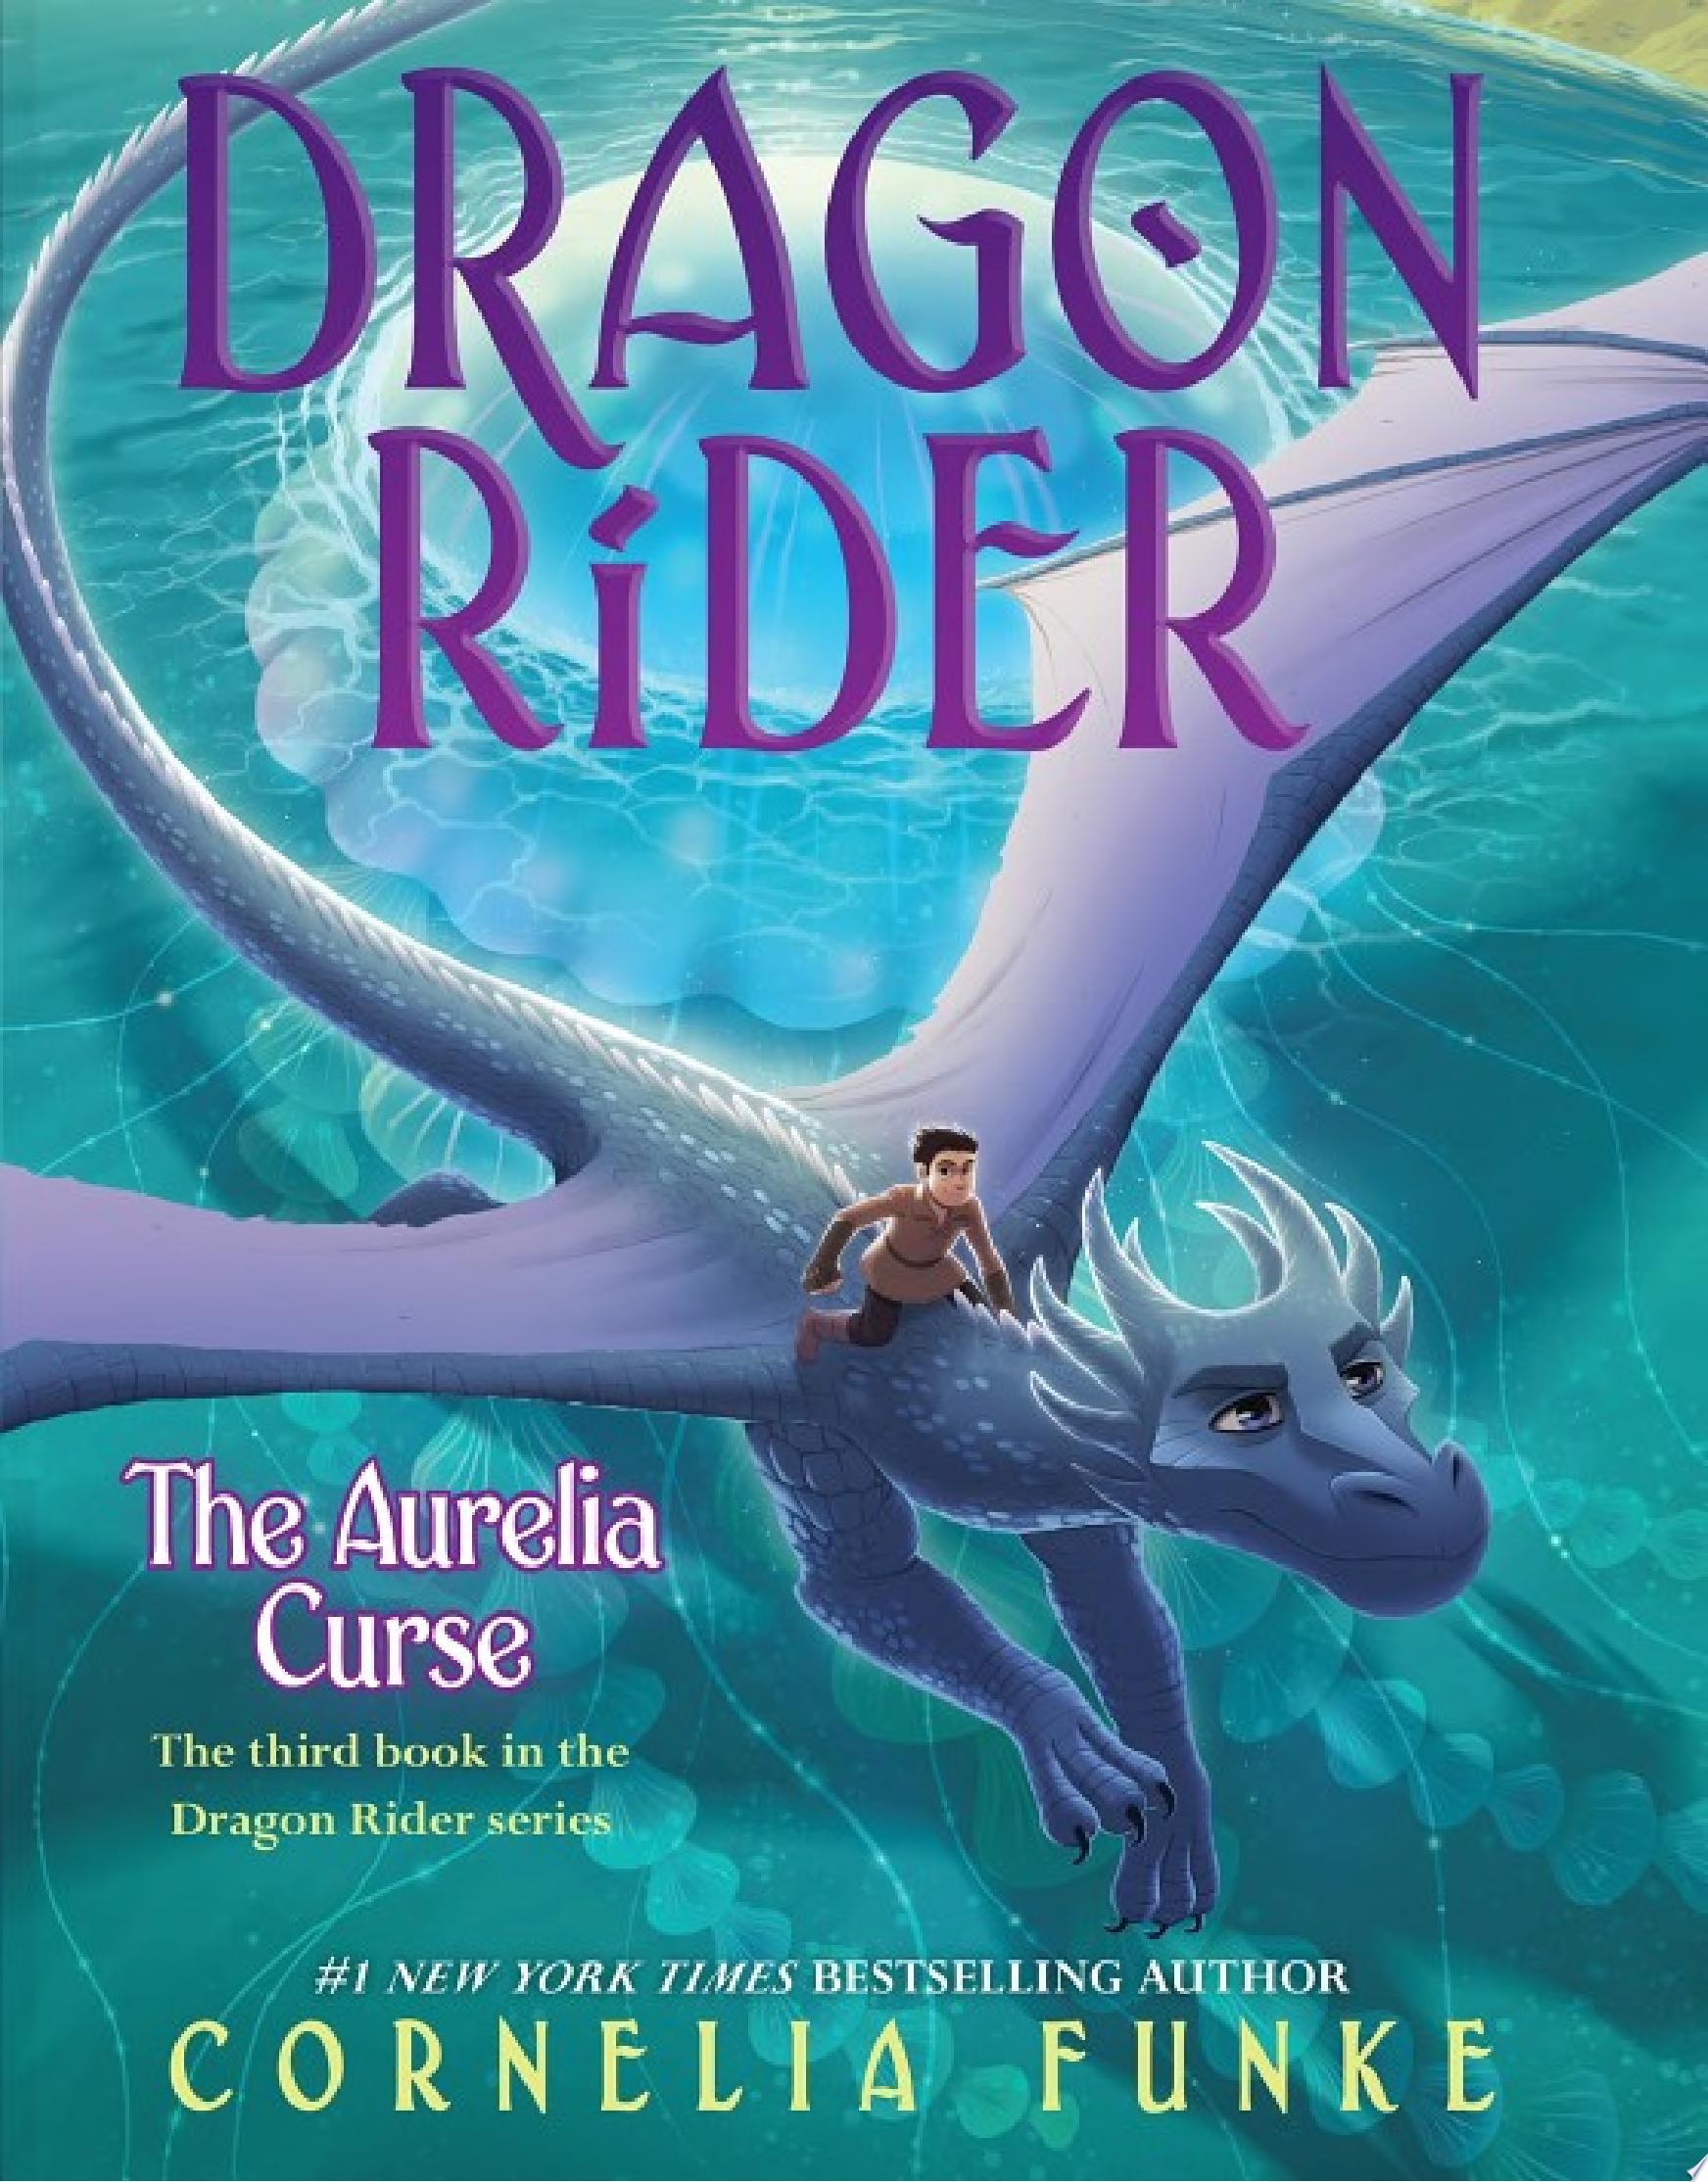 Image for "The Aurelia Curse (Dragon Rider #3)"